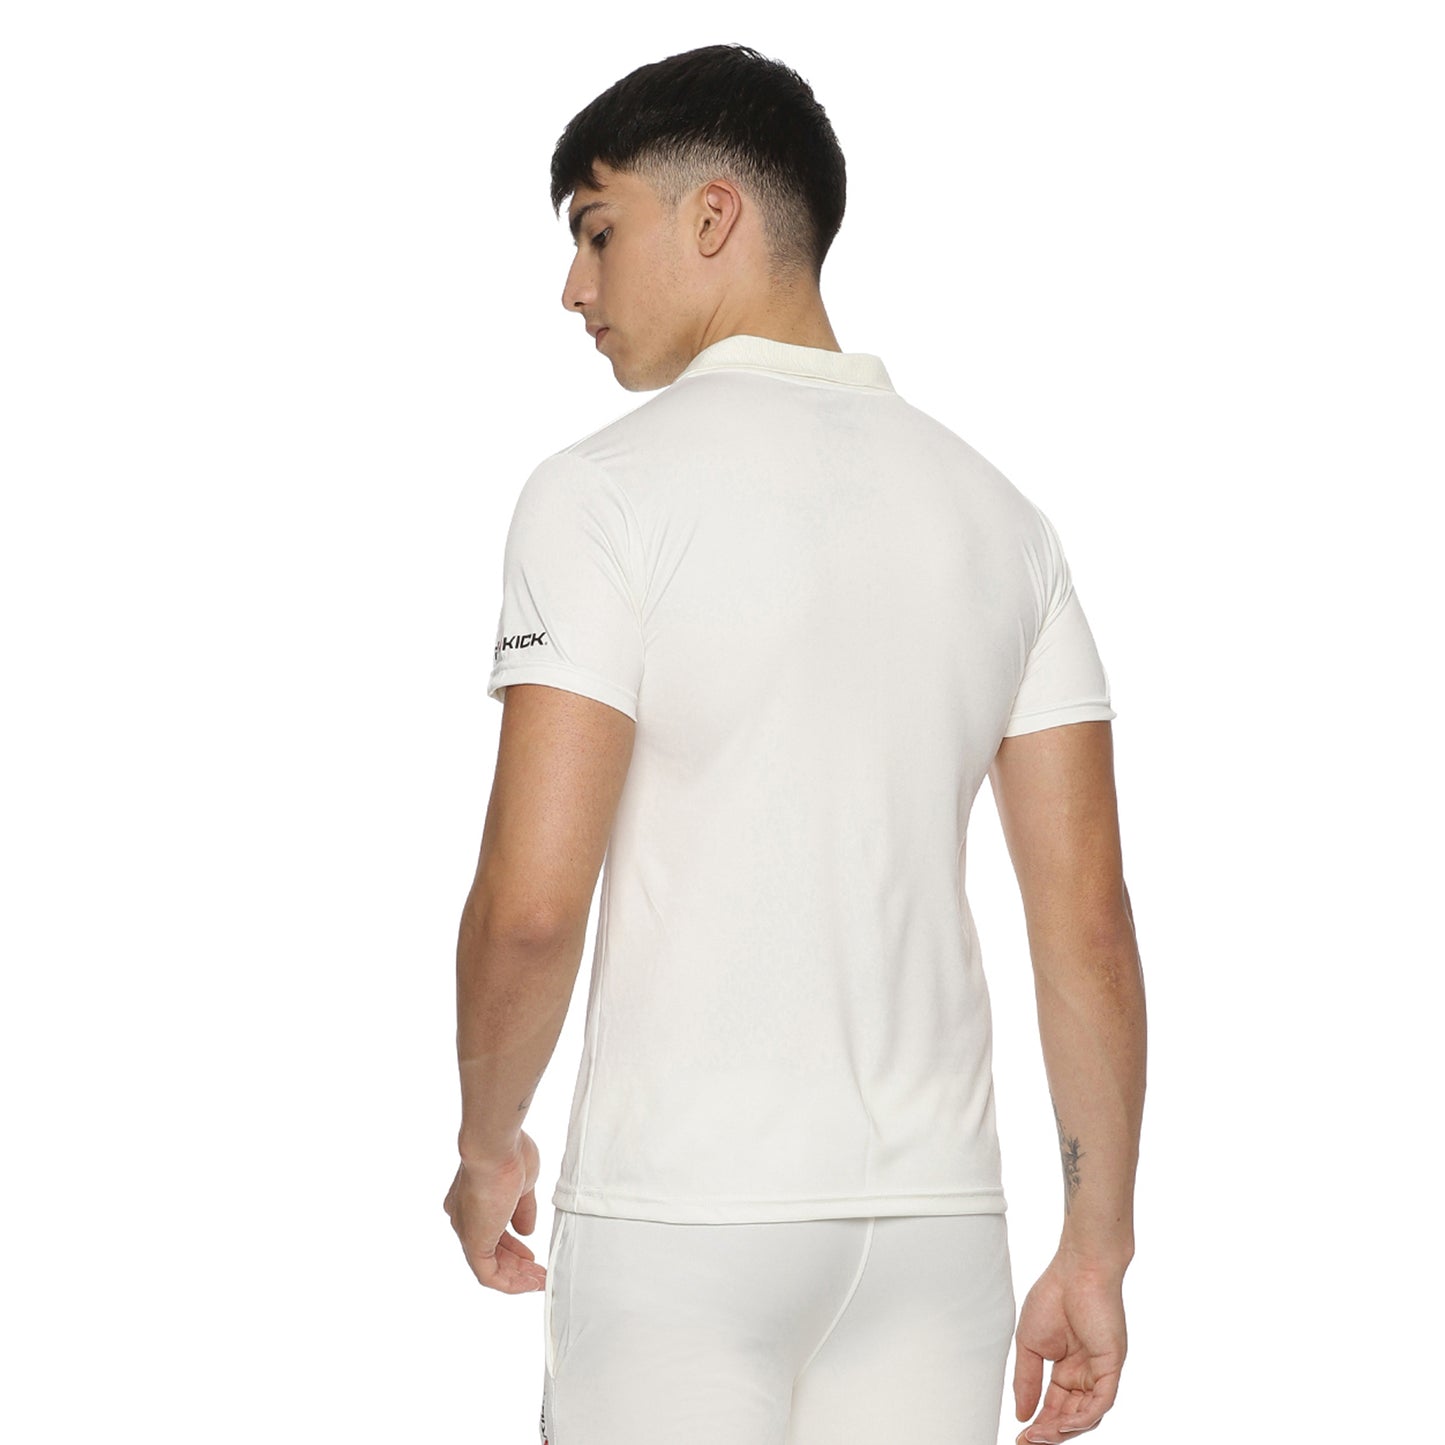 Prokick Ignite Half Sleeves Cricket T-Shirt, Off White - Best Price online Prokicksports.com